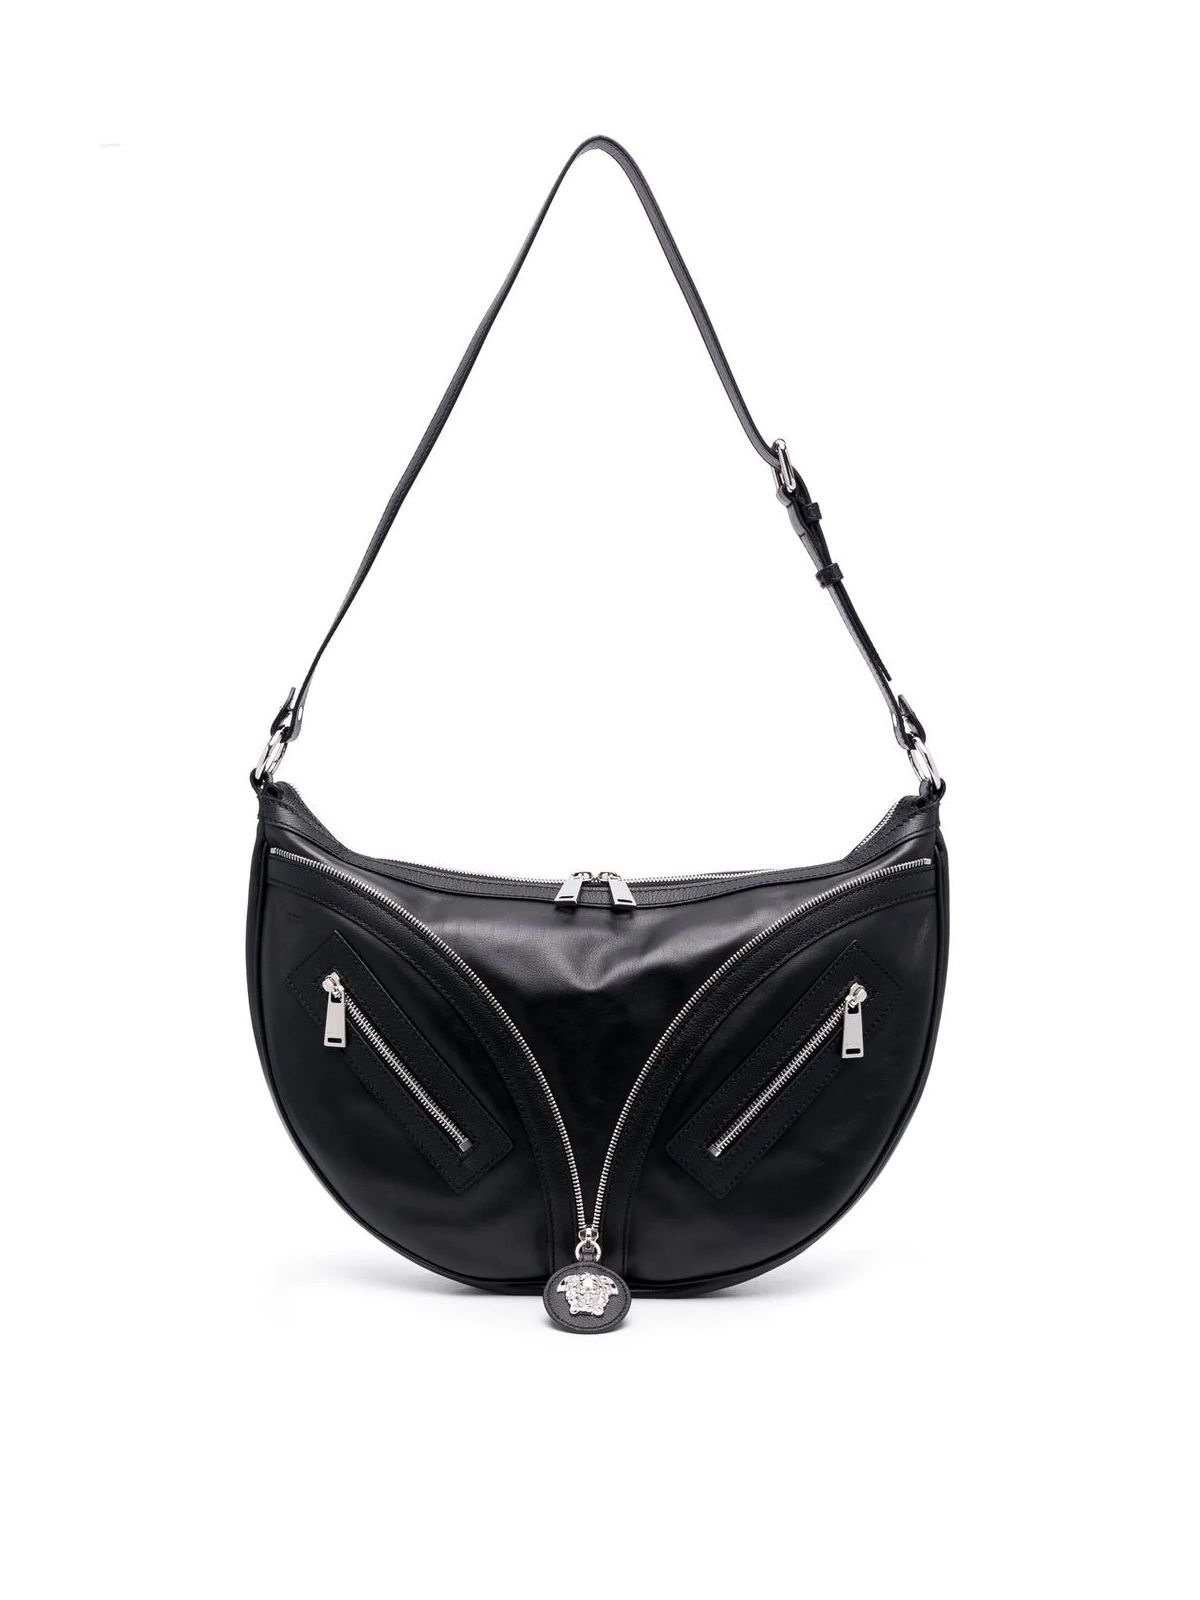 Versace Women's Calf Leather Hobo Bag